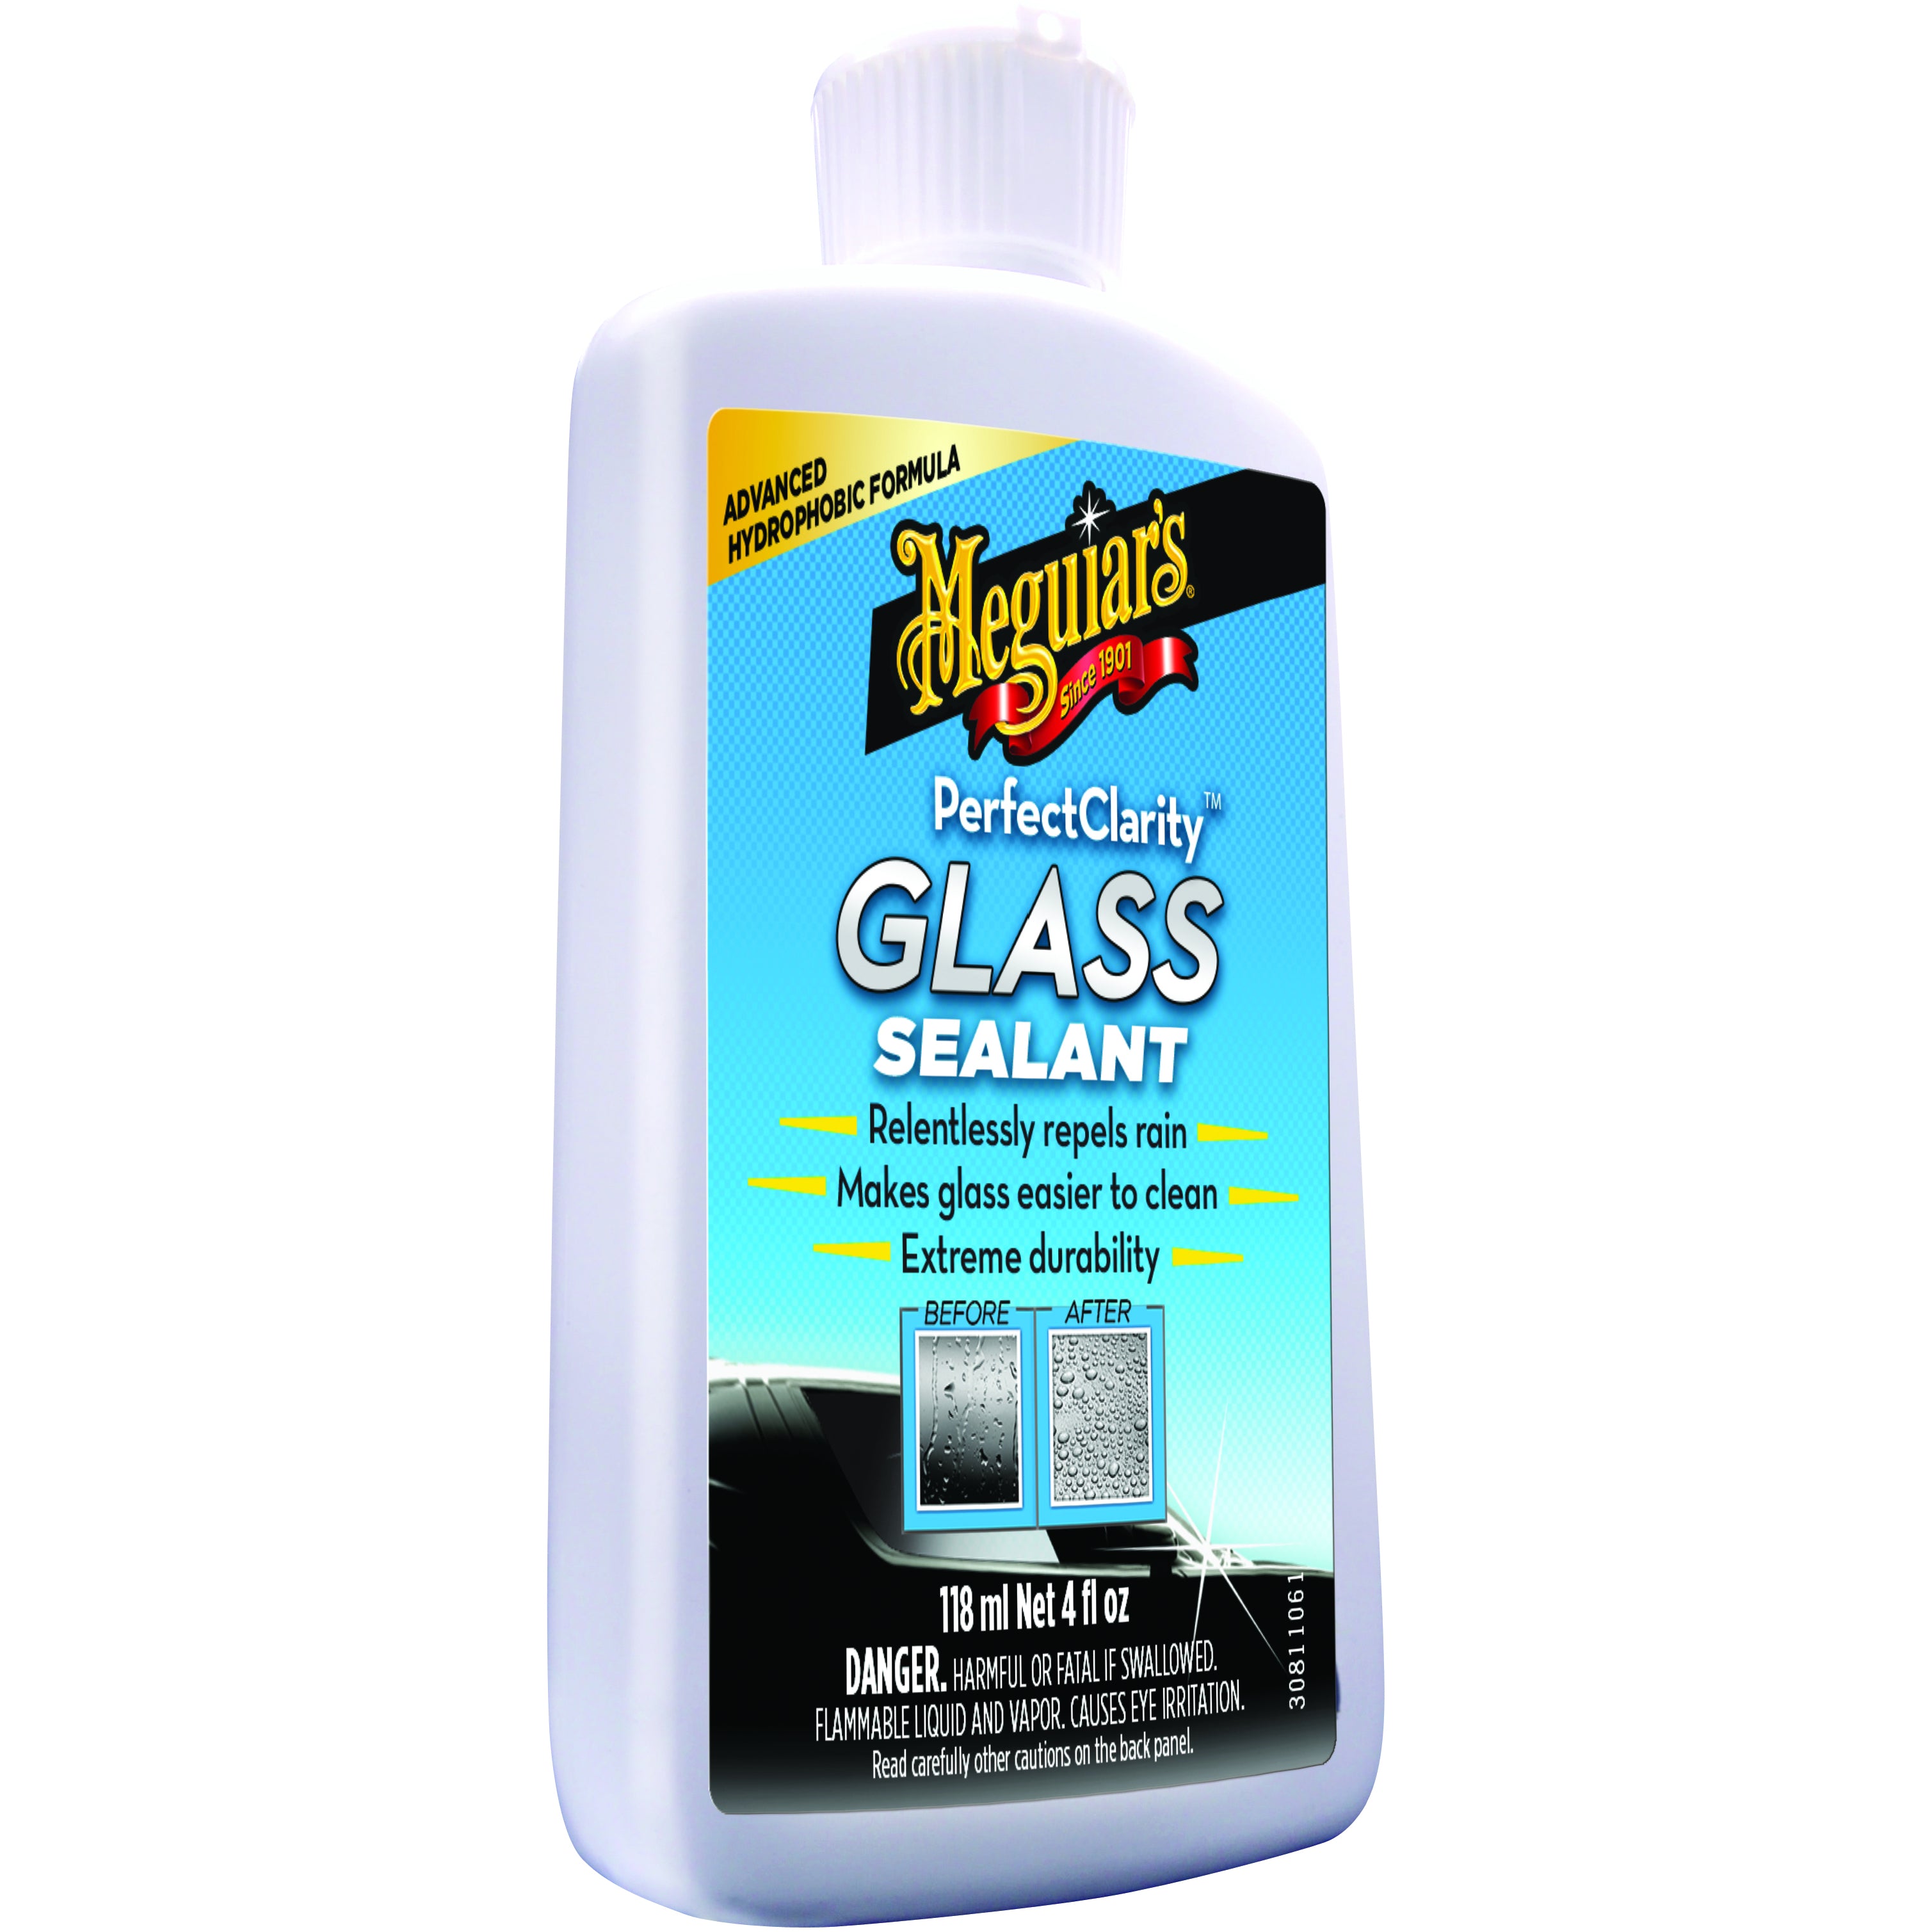 Glass Sealant 118 ml - Meguiar's